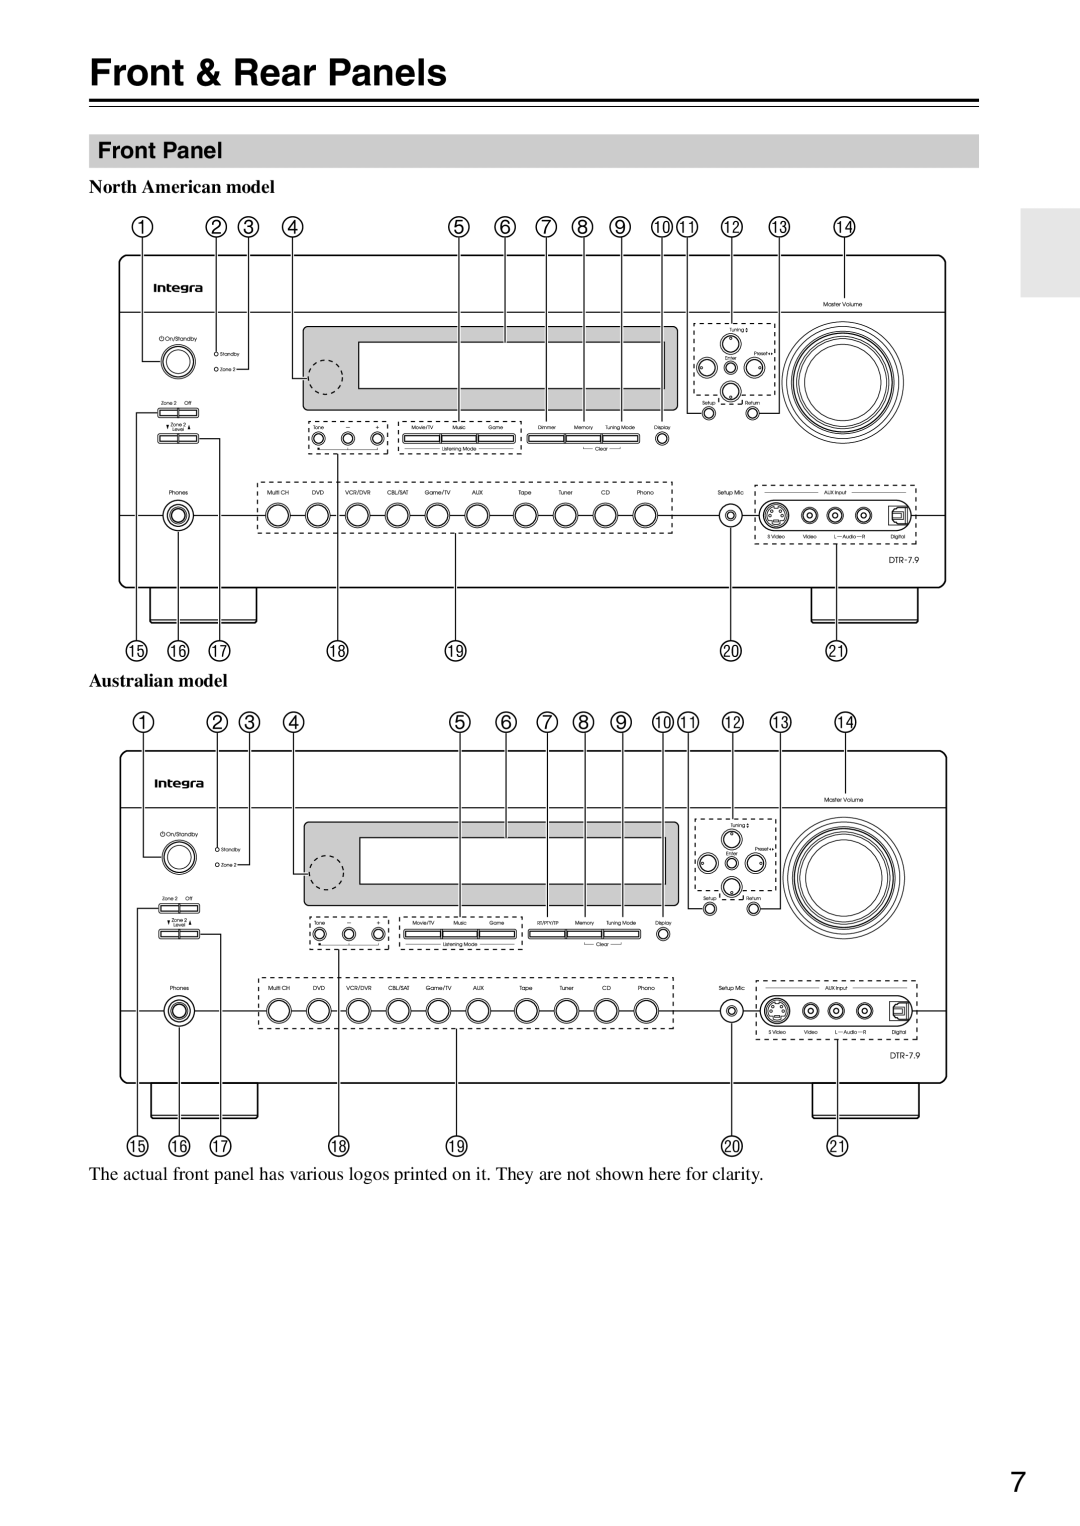 Onkyo DTR-7.9 instruction manual Front & Rear Panels 